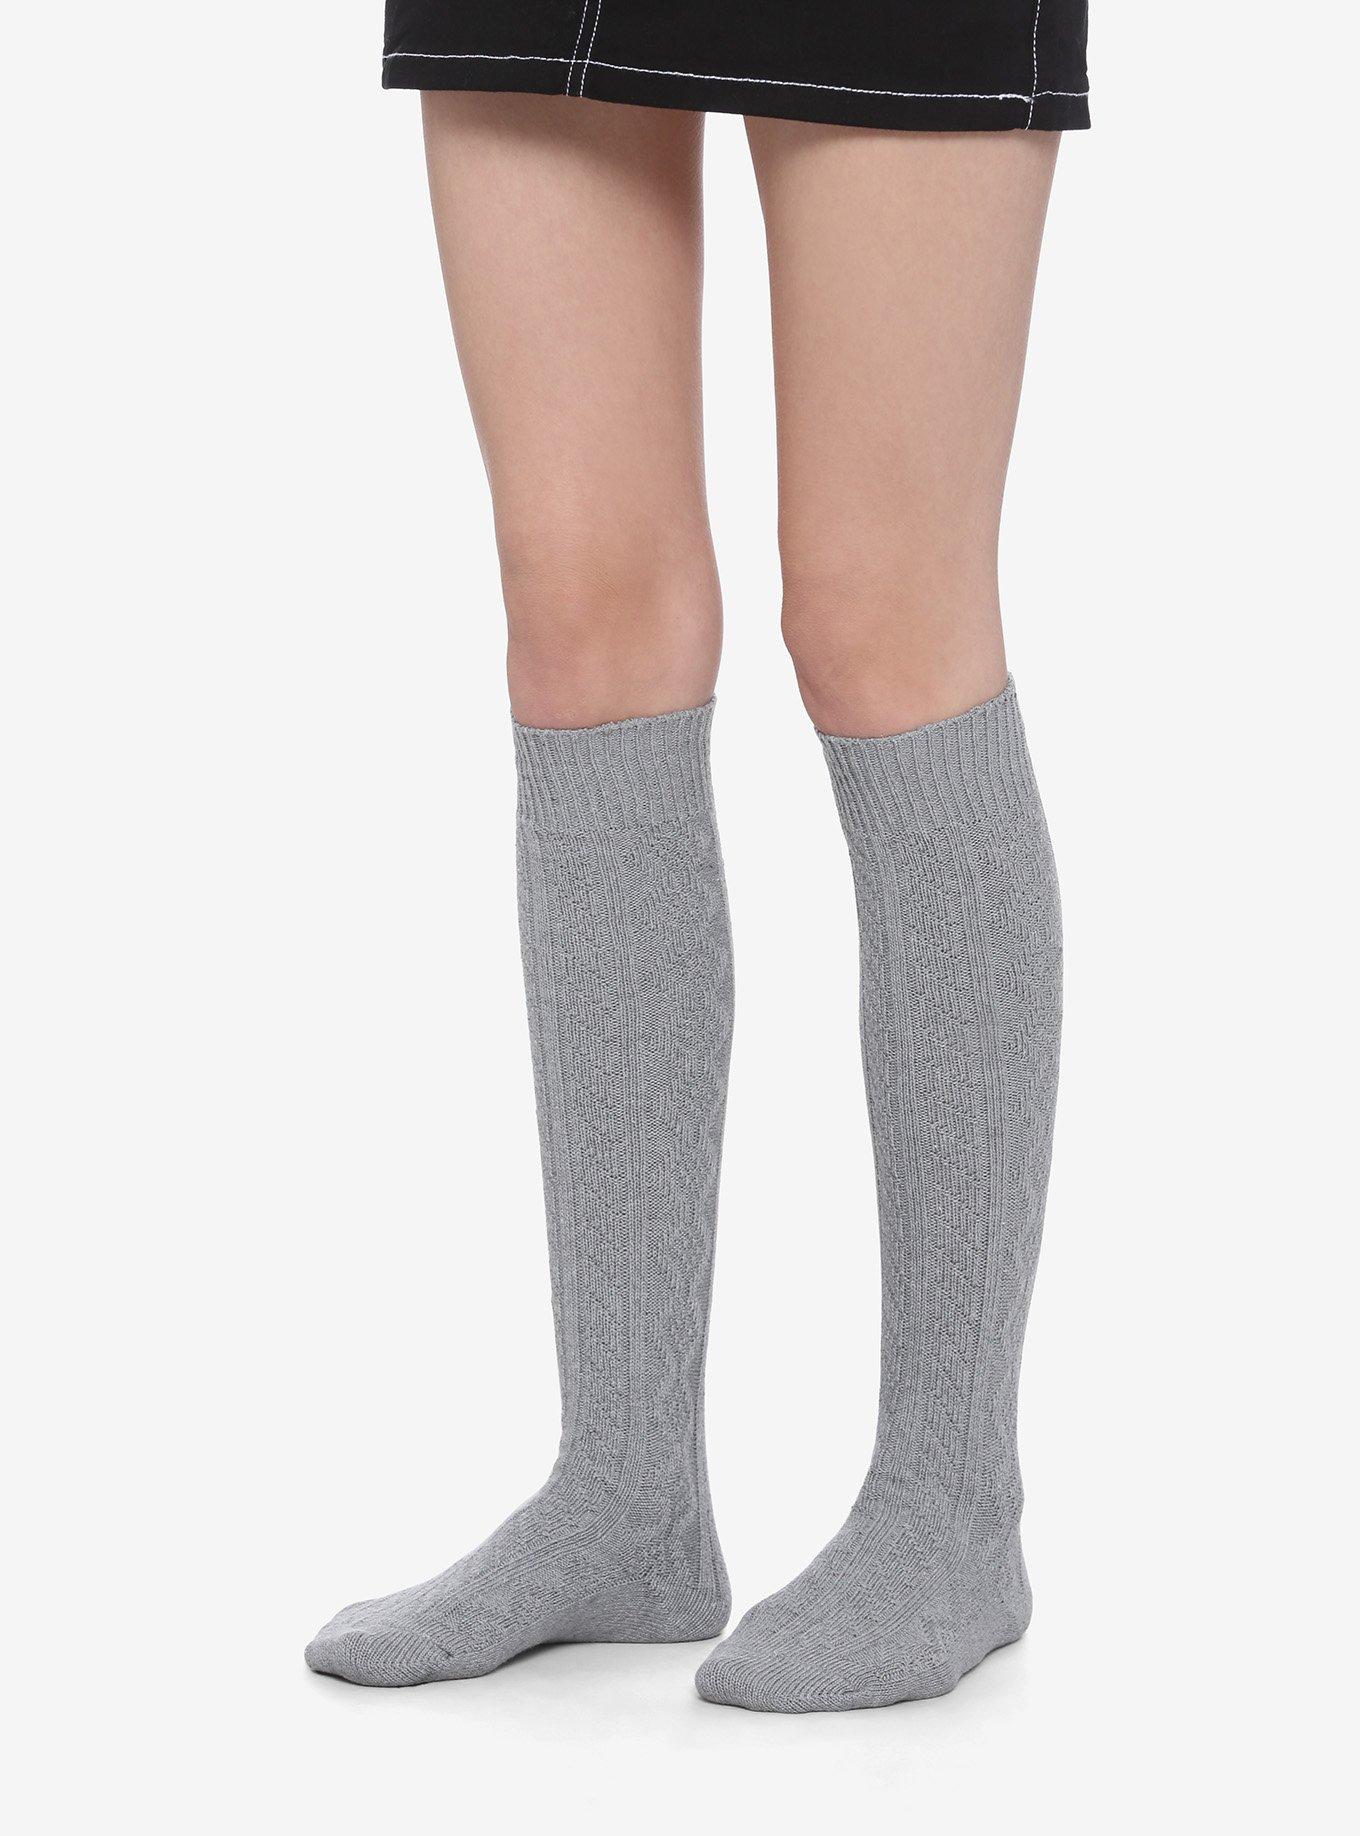 Grey Knit Knee-High Socks, , hi-res